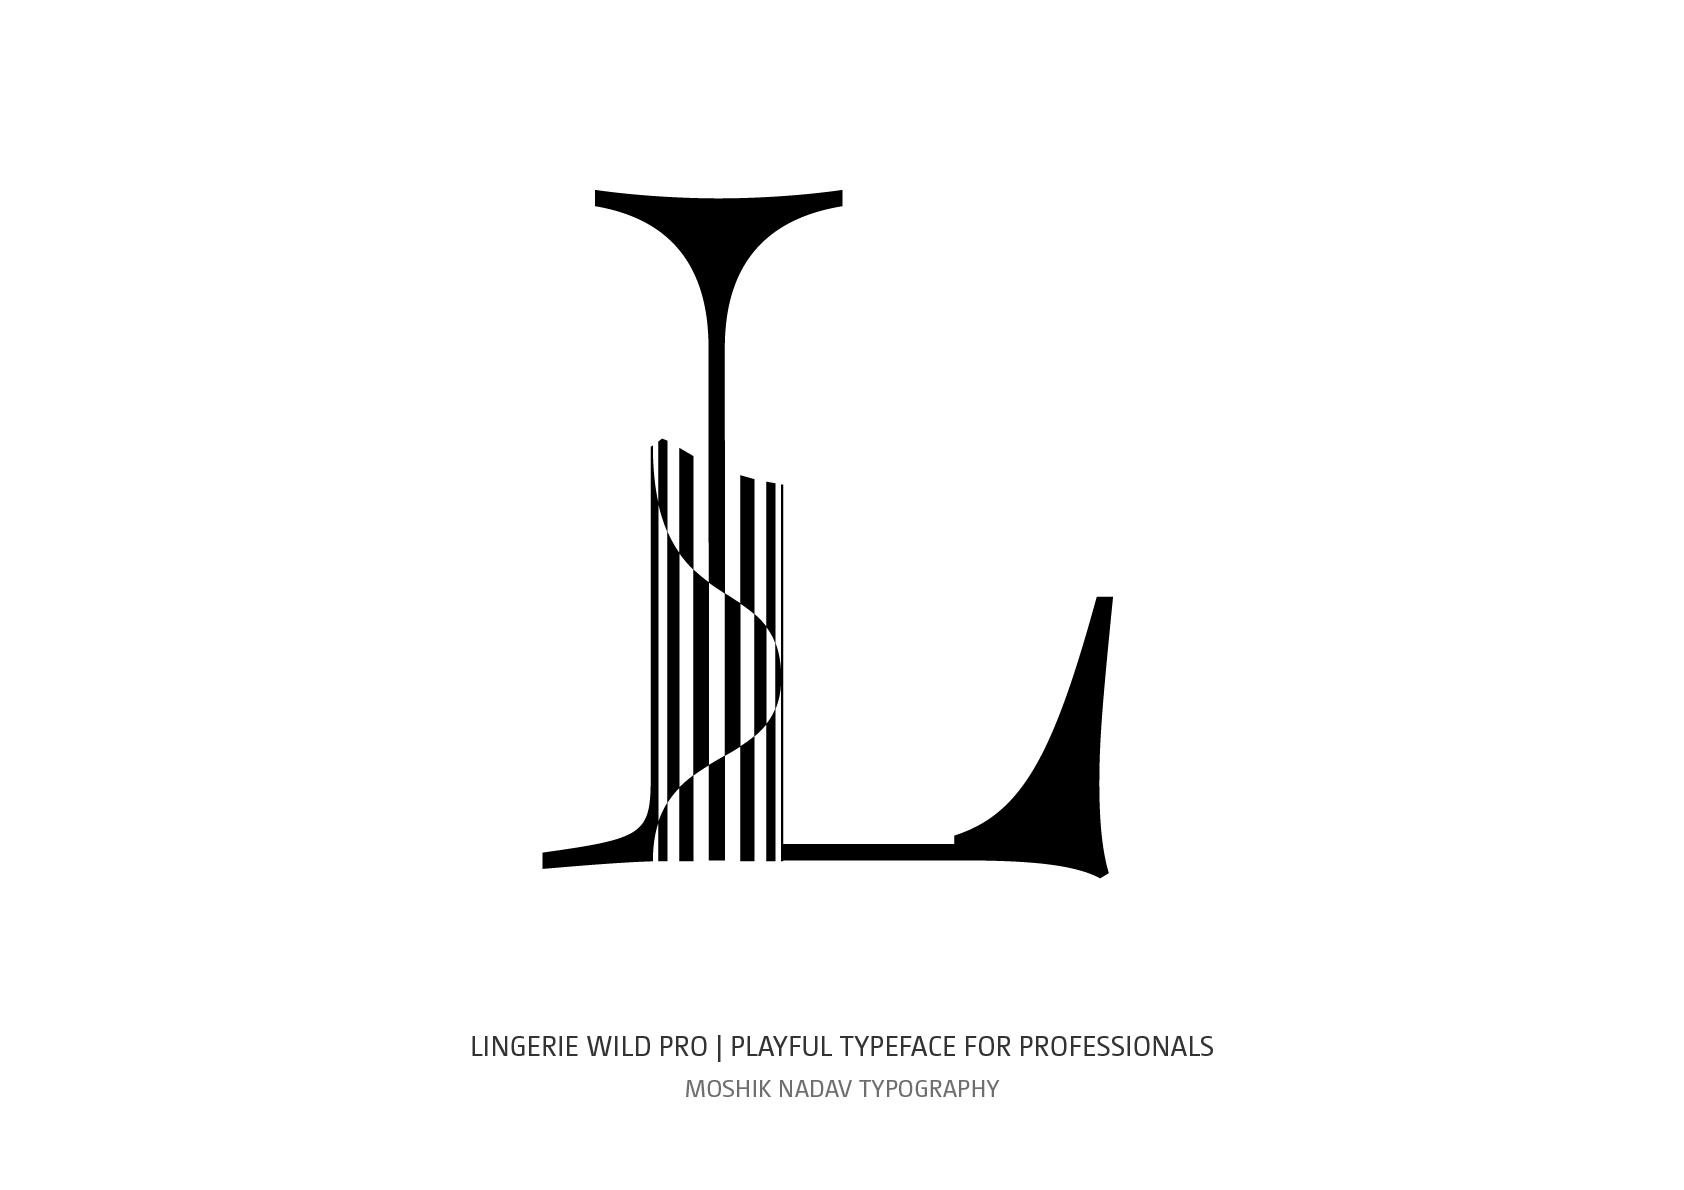 Lingerie Wild Pro Amazing new font by Moshik Nadav Typography